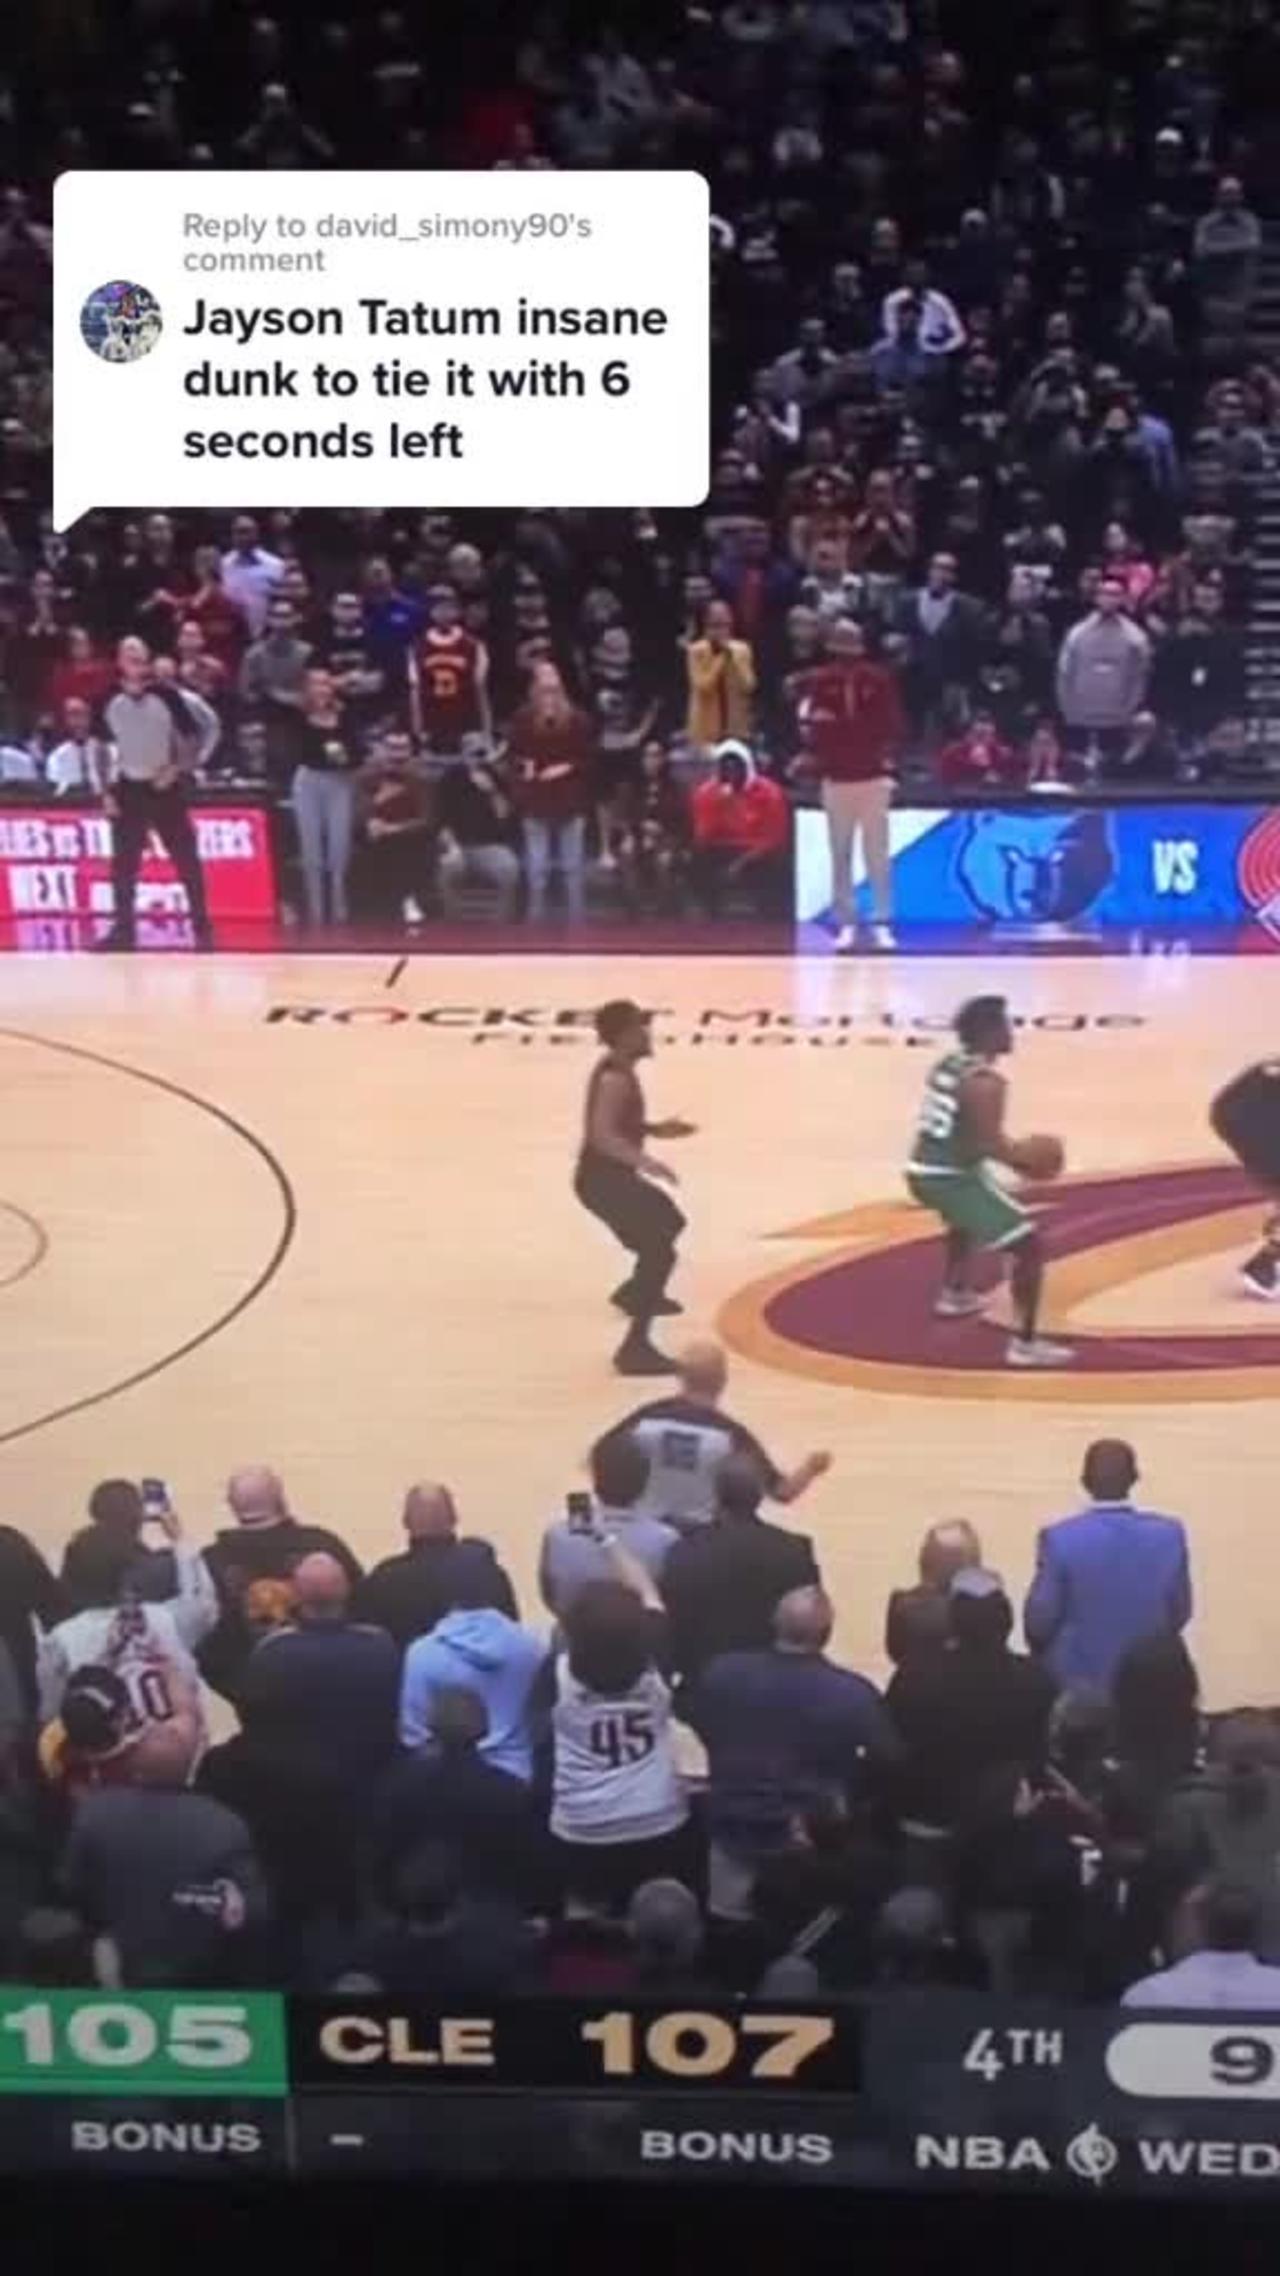 Jayson Tatum insane dunk to go into overtime. Boston Celtics vs Cleveland Cavaliers